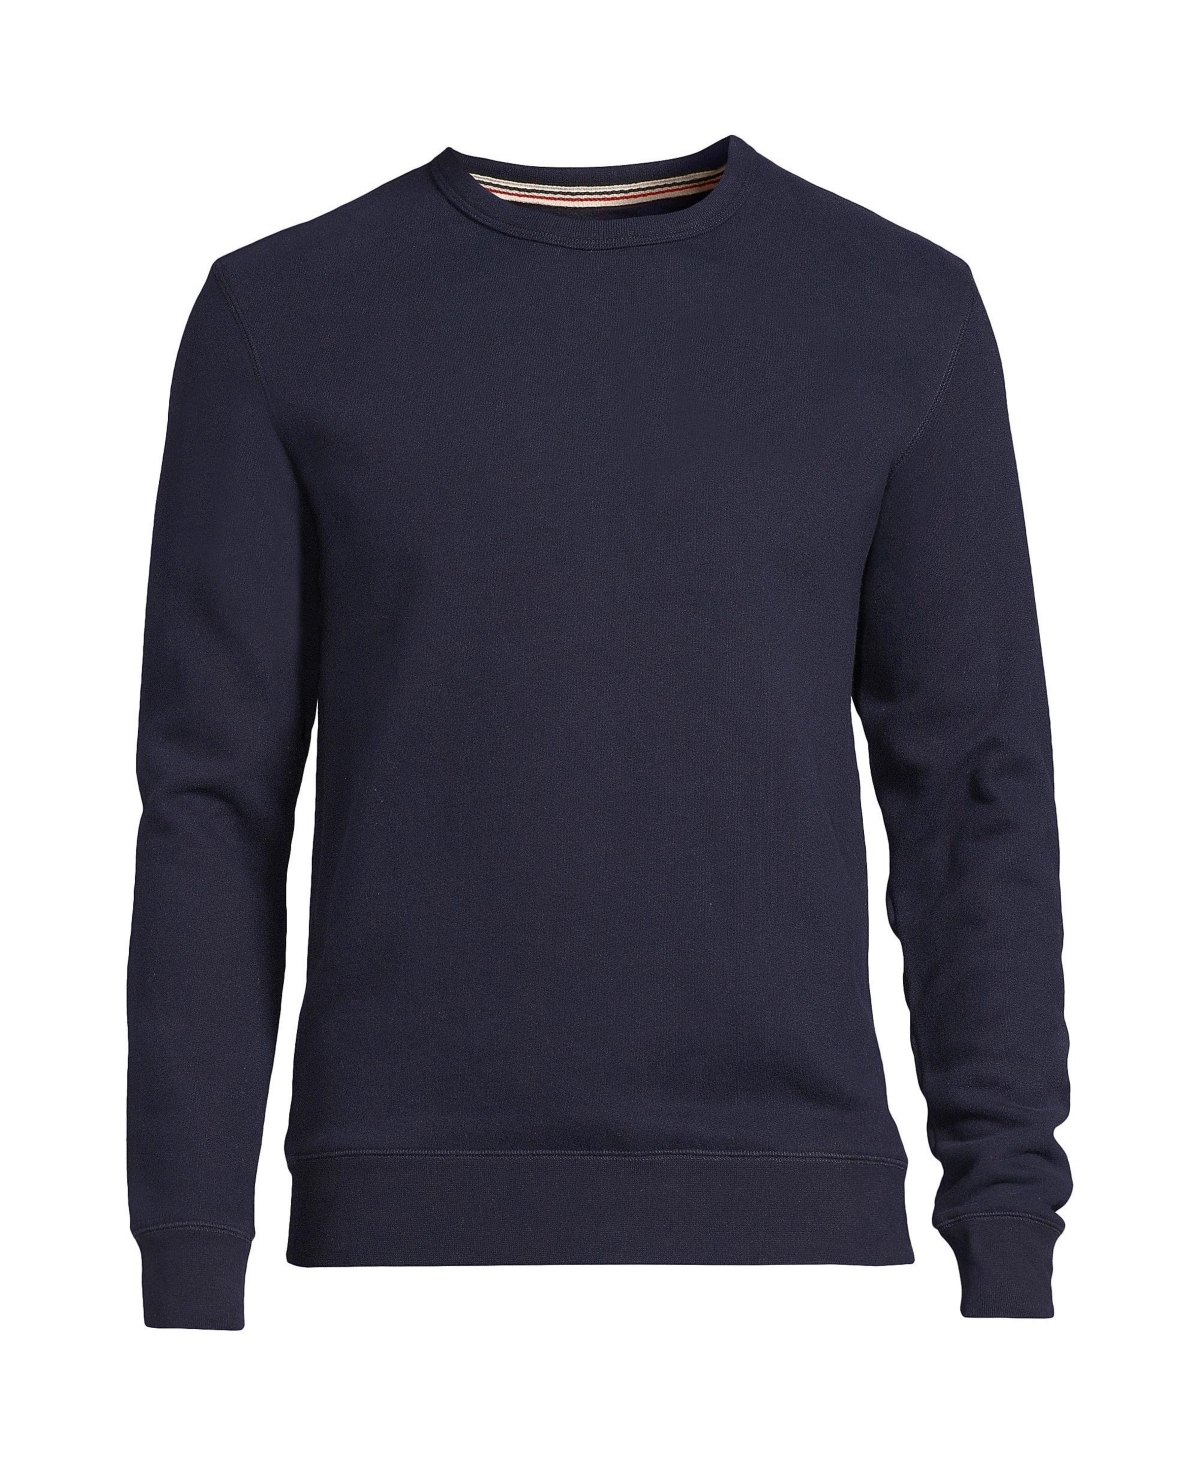 Men's Long Sleeve Serious Sweats Crewneck Sweatshirt - Deep balsam